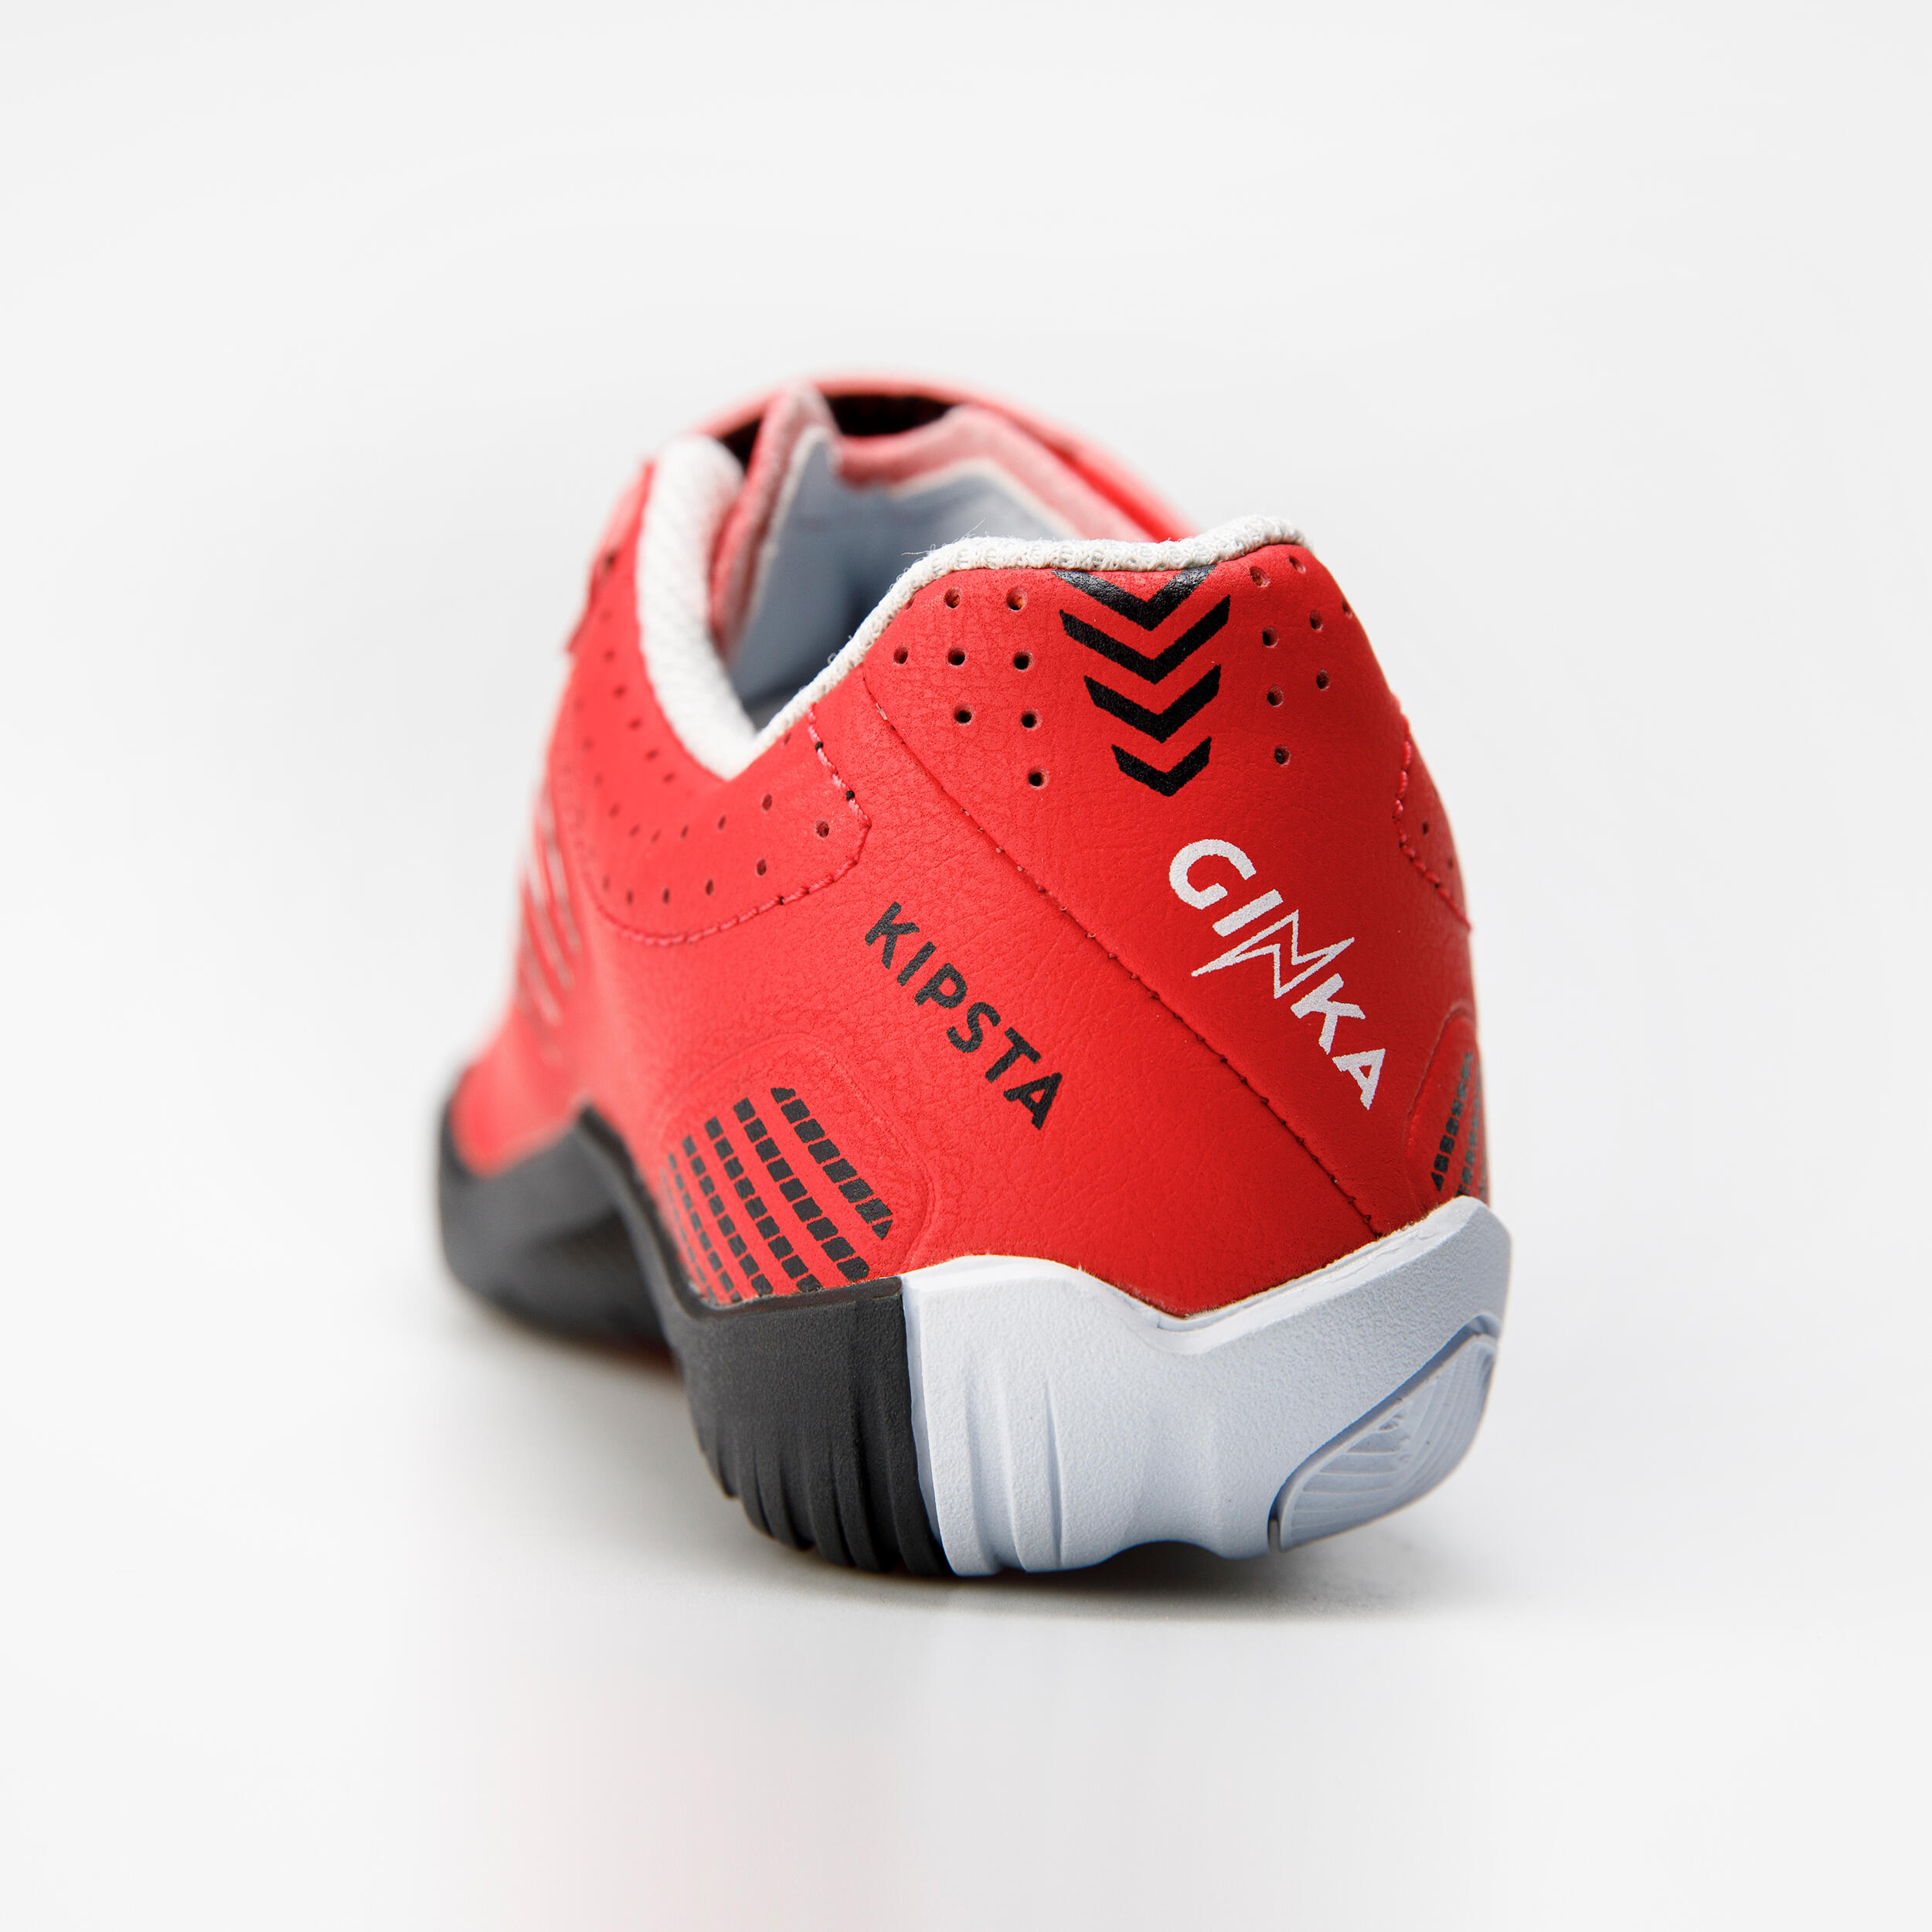 Kids' Futsal Shoes Ginka 500 - Red/Black 6/8